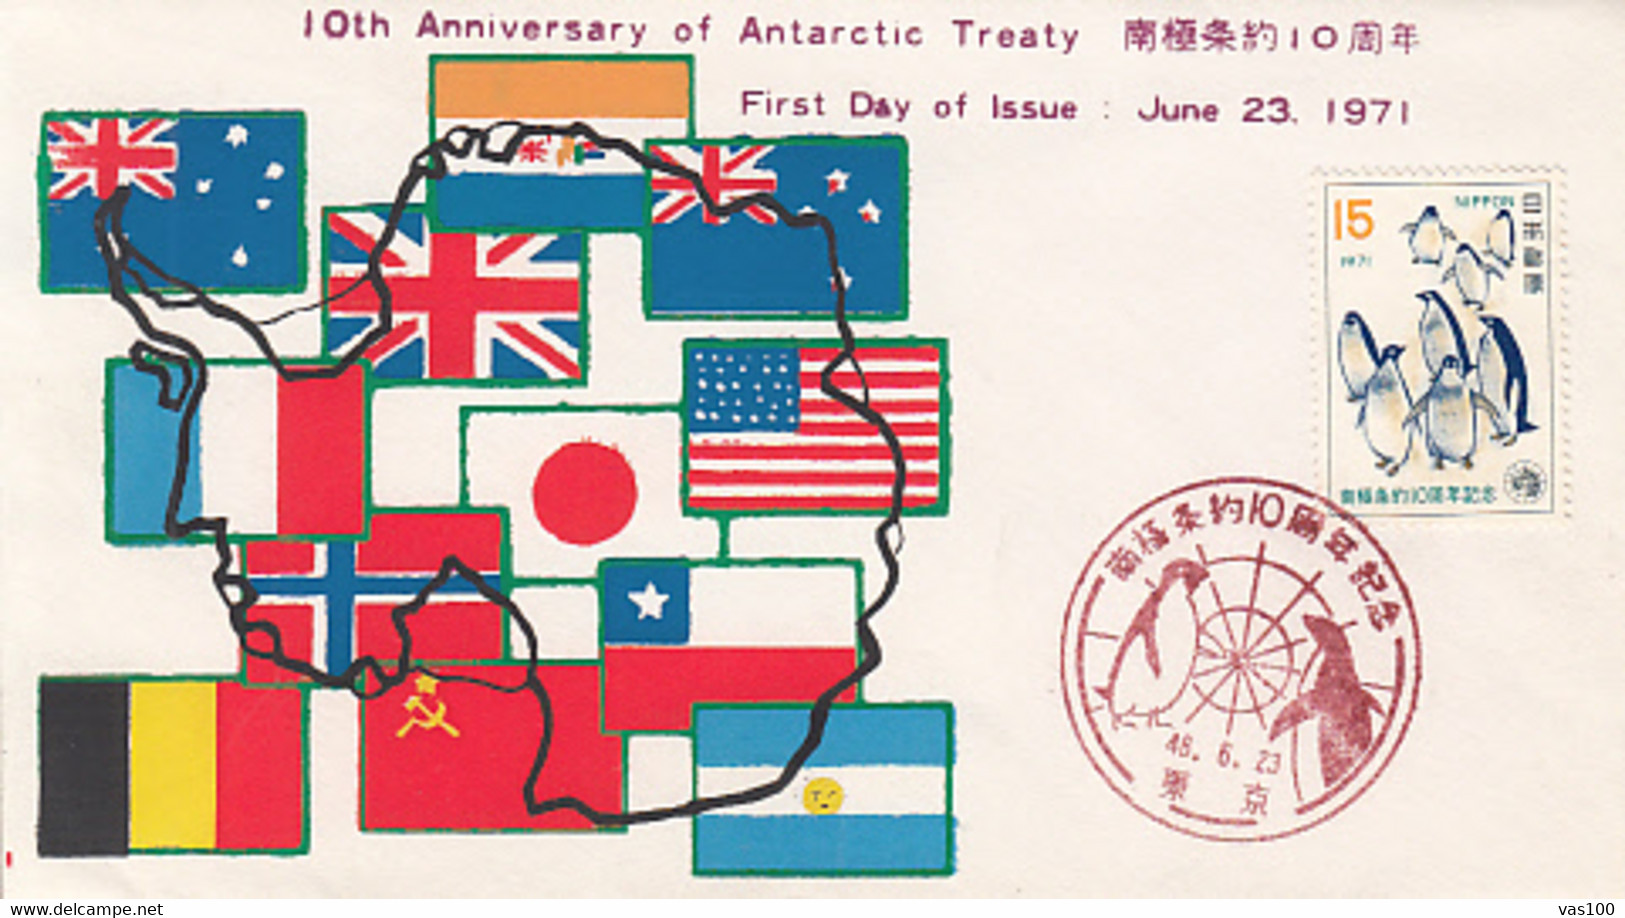 SOUTH POLE, ANTARCTIC TREATY, COVER FDC, 1971, JAPAN - Antarktisvertrag